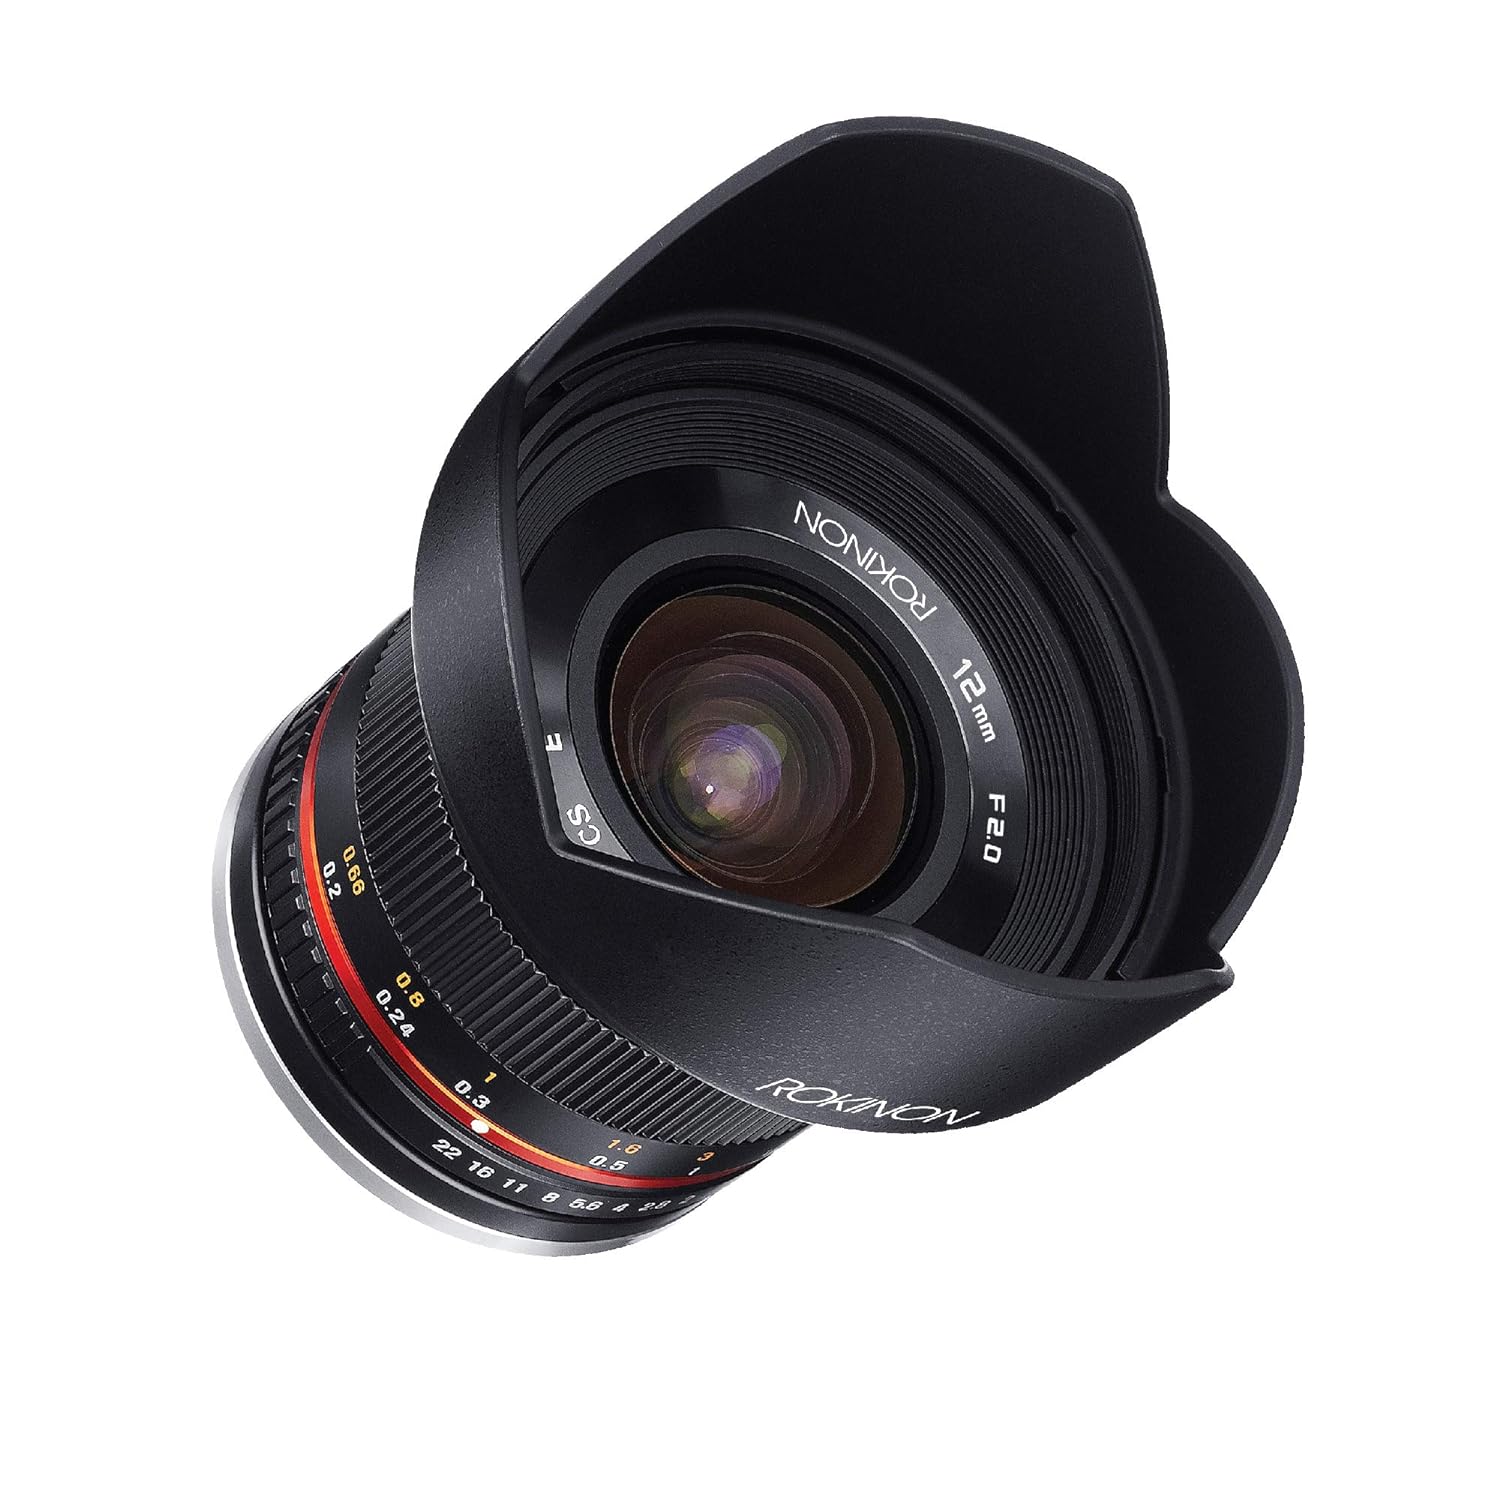 Rokinon RK12M-MFT 12mm F2.0 NCS CS Ultra Wide Angle Fixed Lens for Olympus and Panasonic Micro 4/3 (MFT) Mount Digital Cameras (Black)